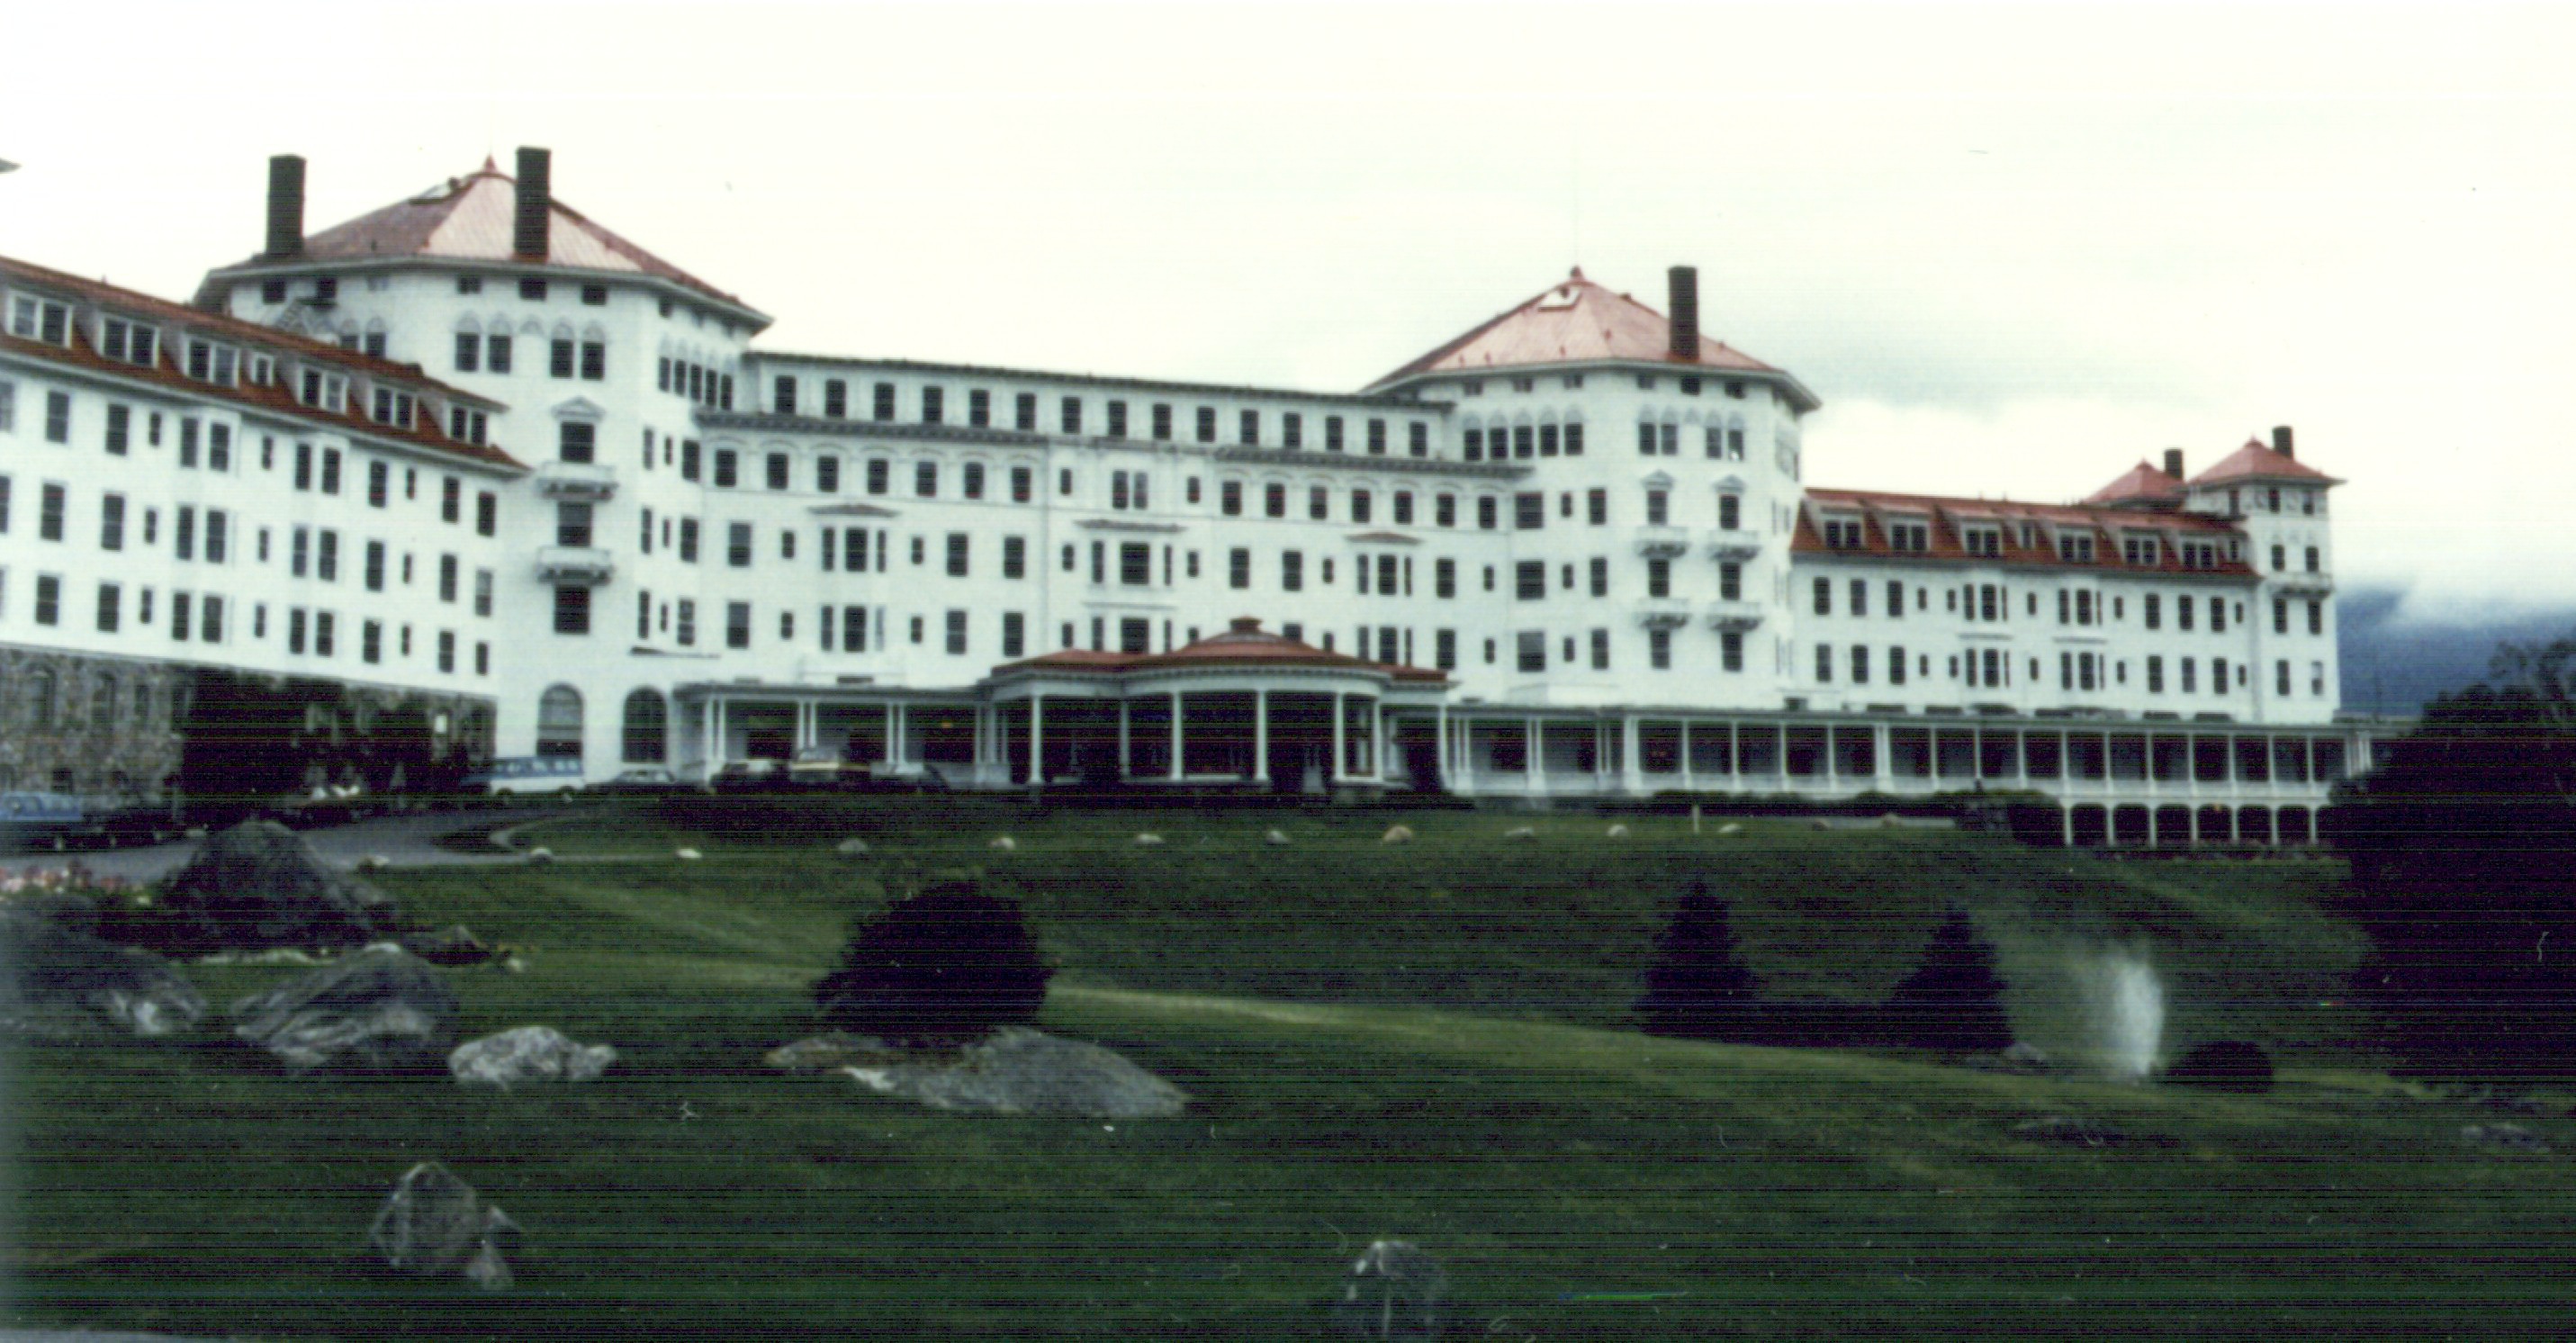 Mount Washington Hotel located at Bretton Woods